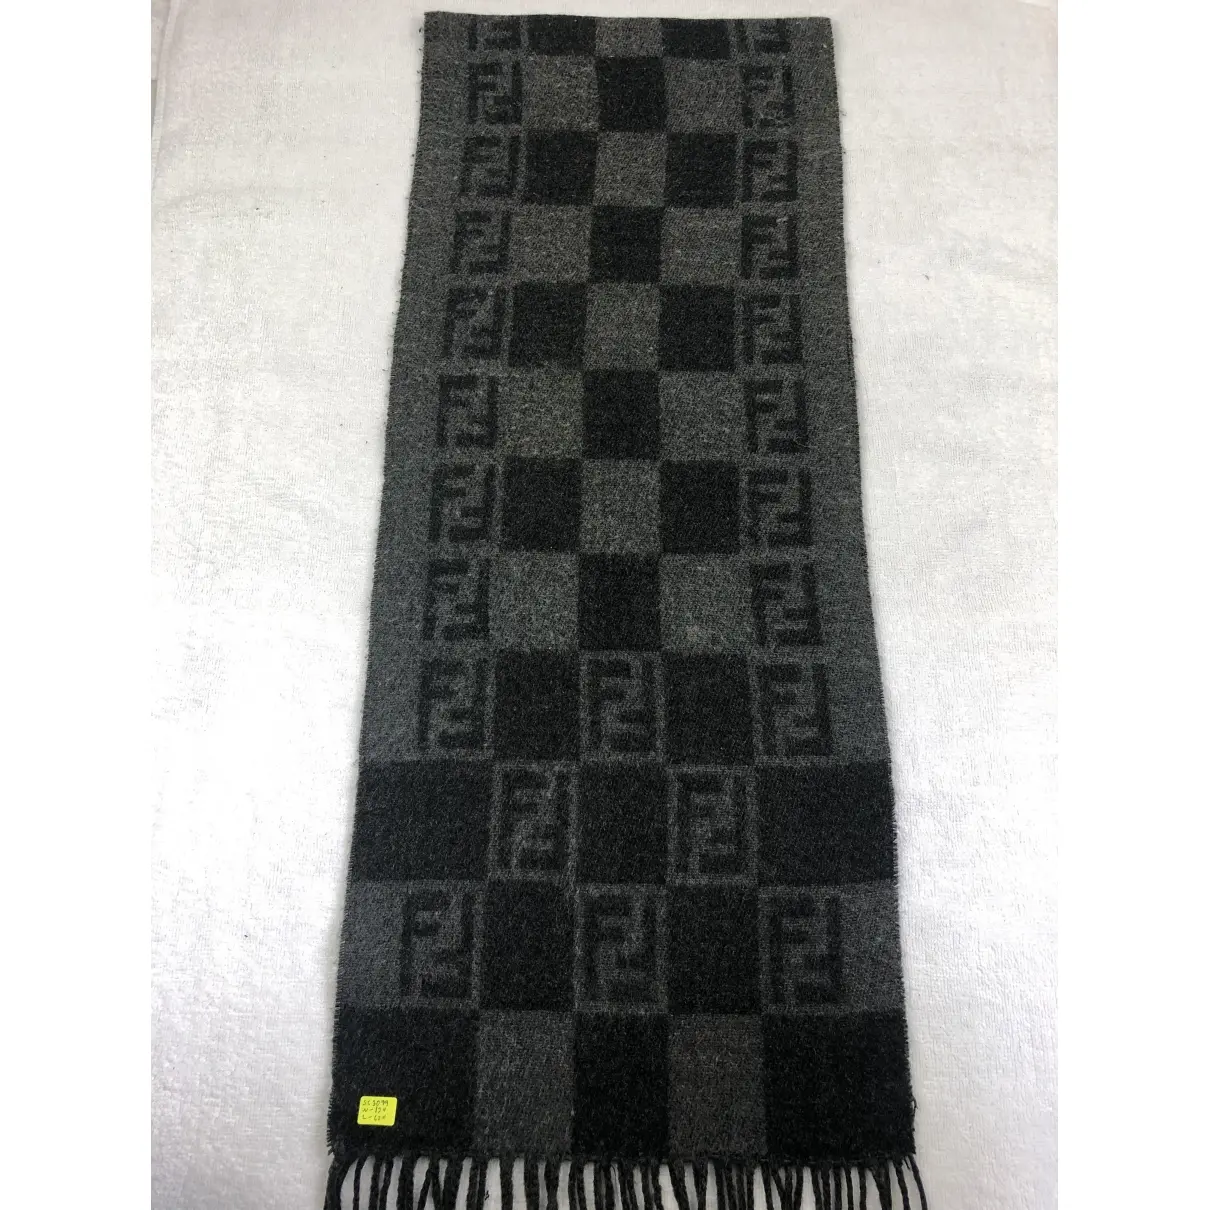 Fendi Wool scarf for sale - Vintage